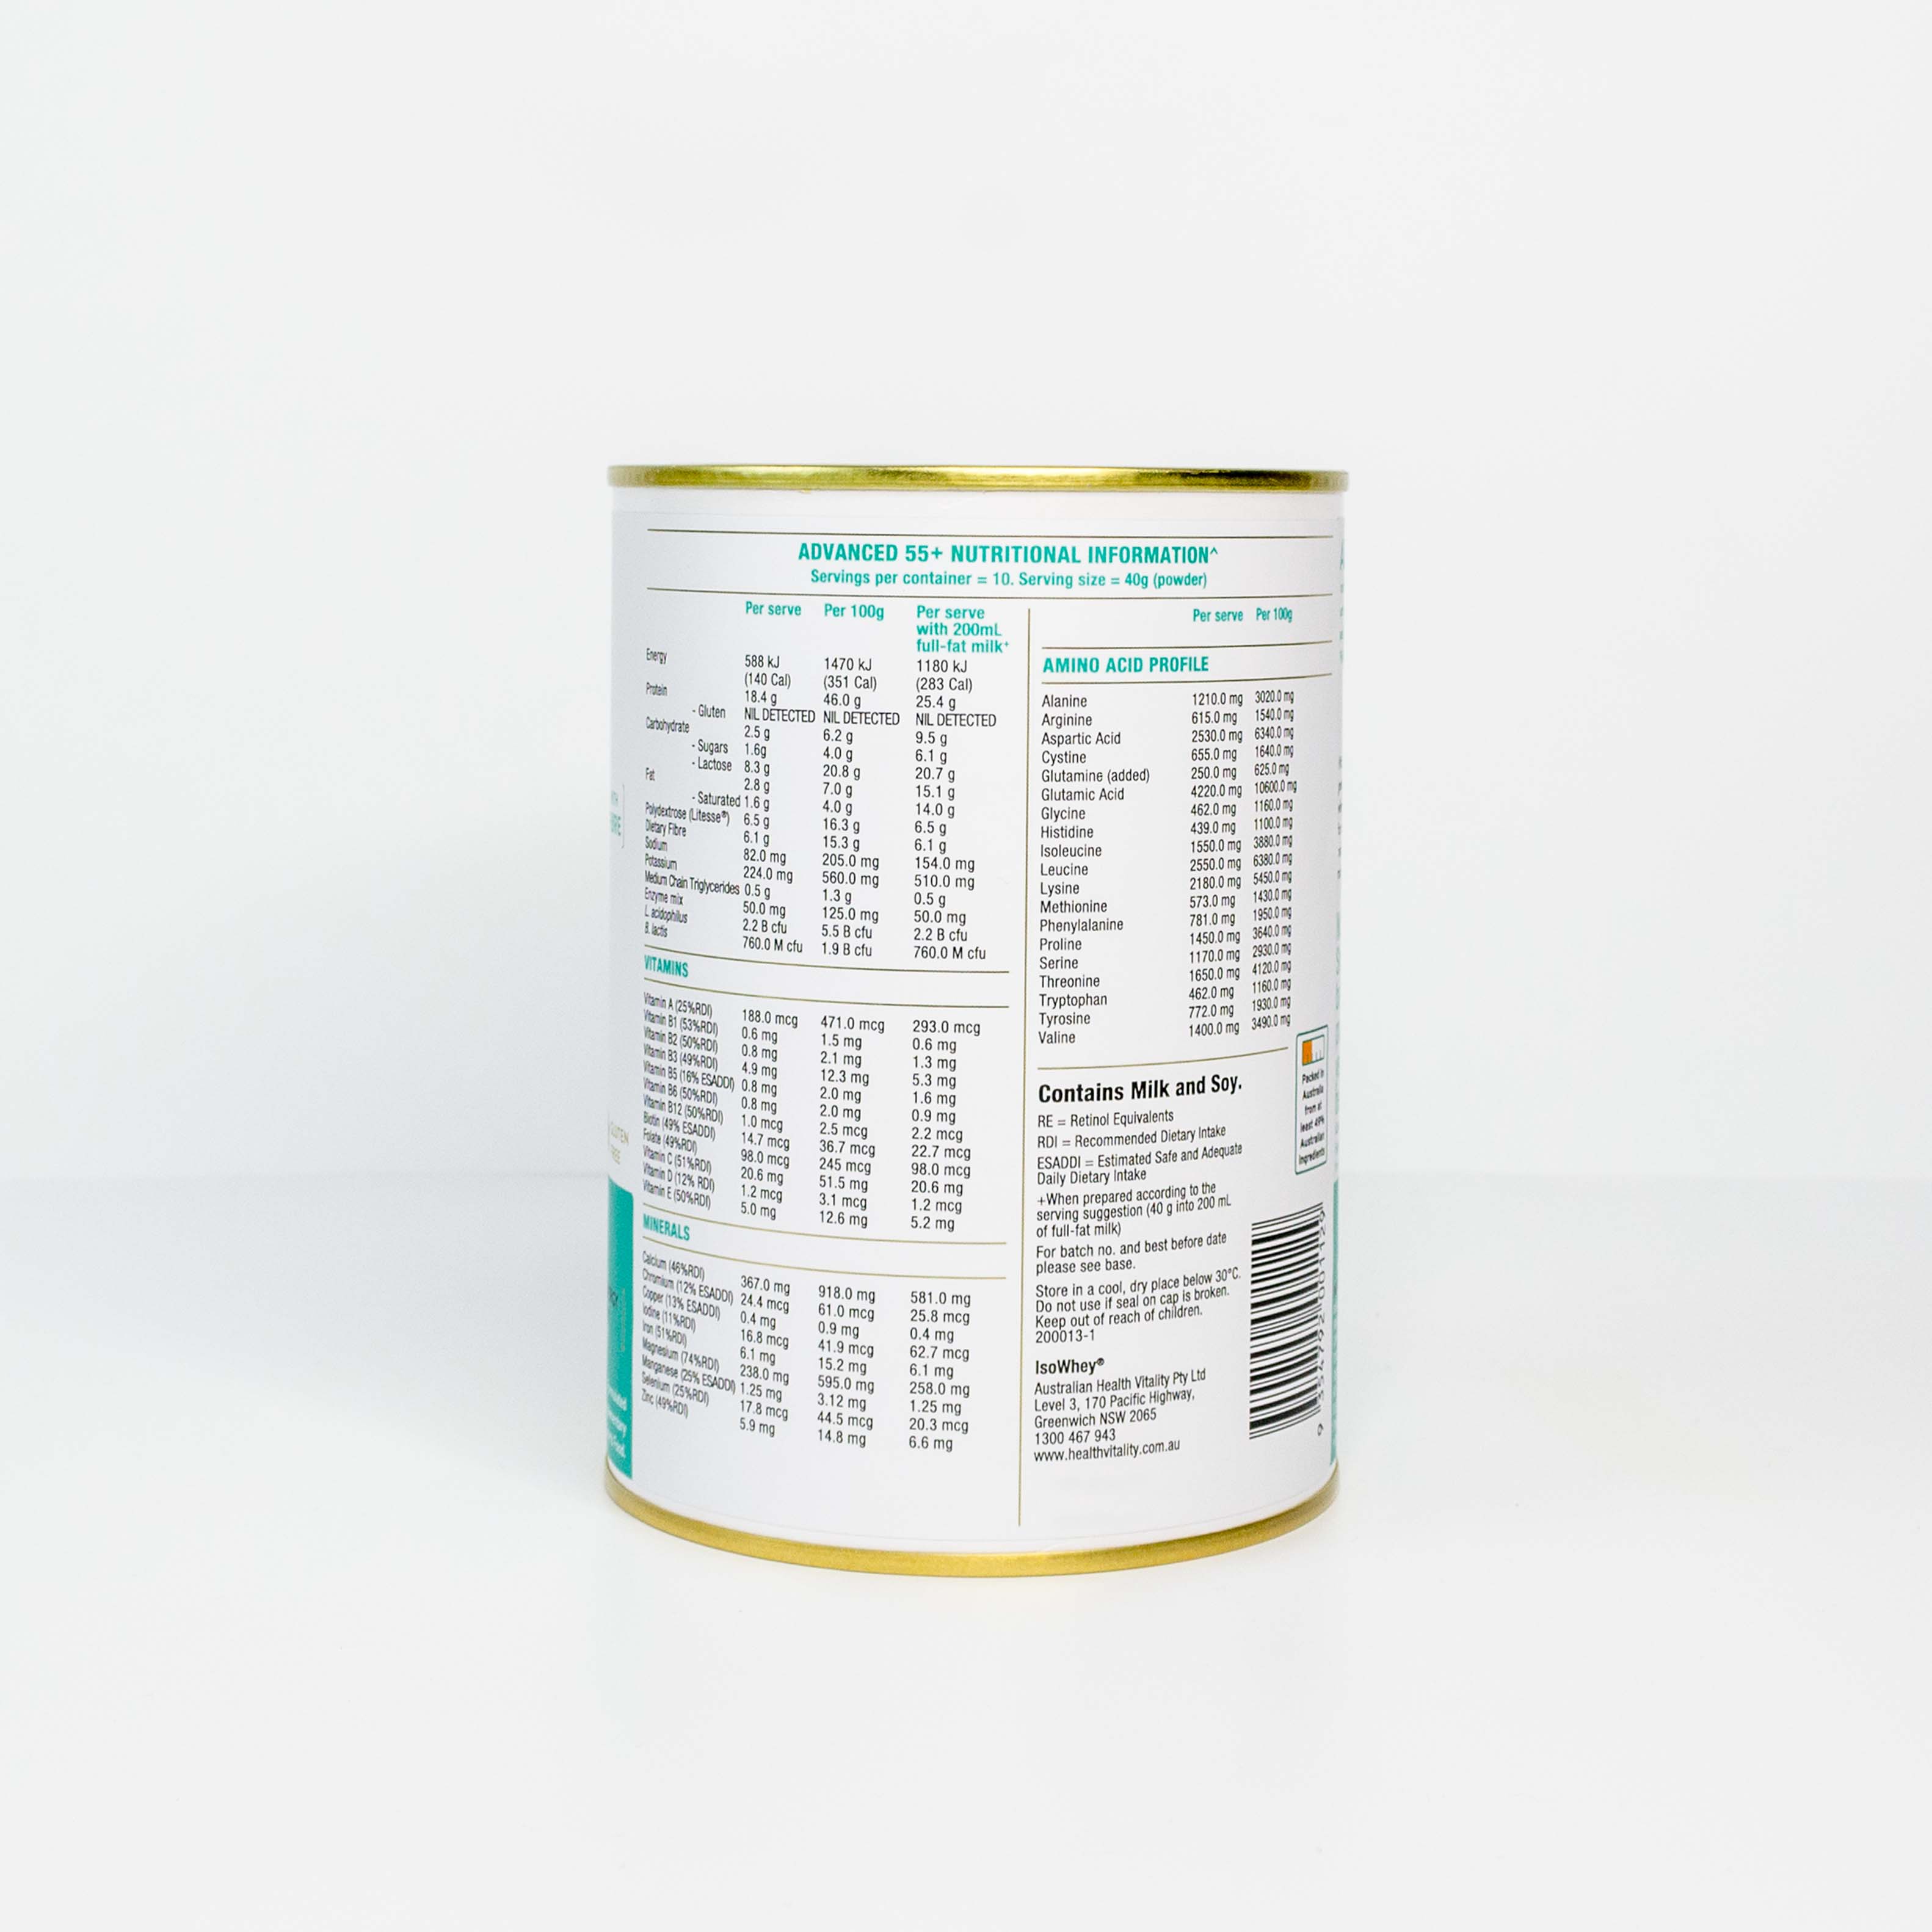 IsoWhey Clinical Nutrition Advanced 55+ Vanilla 400g